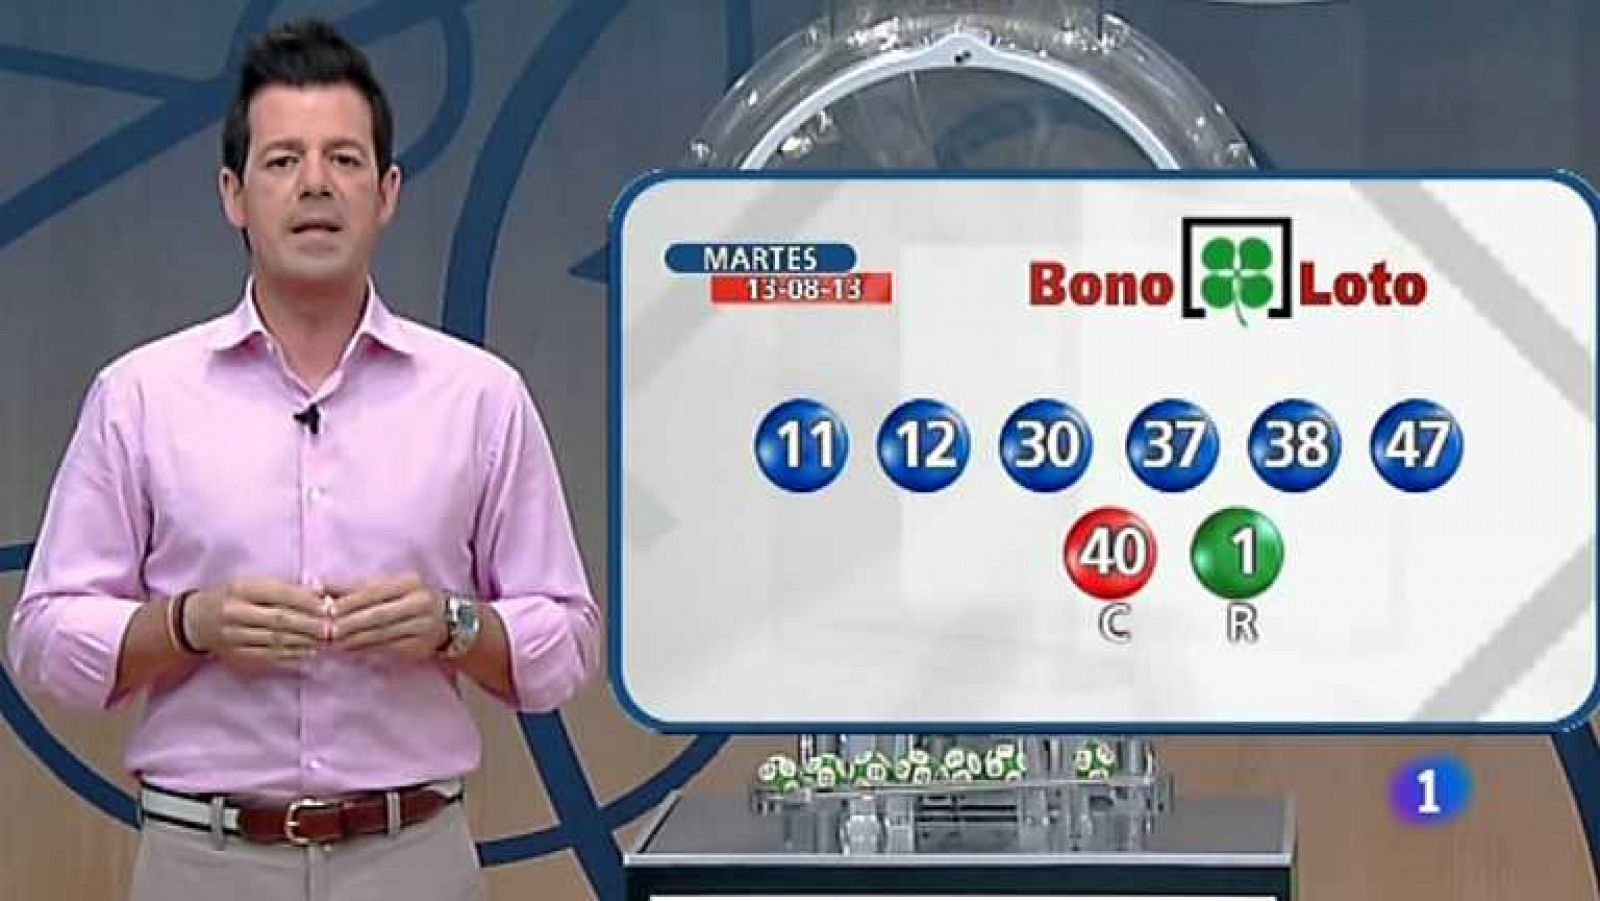 Loterías: Bonoloto + Euromillones - 13/08/13 | RTVE Play